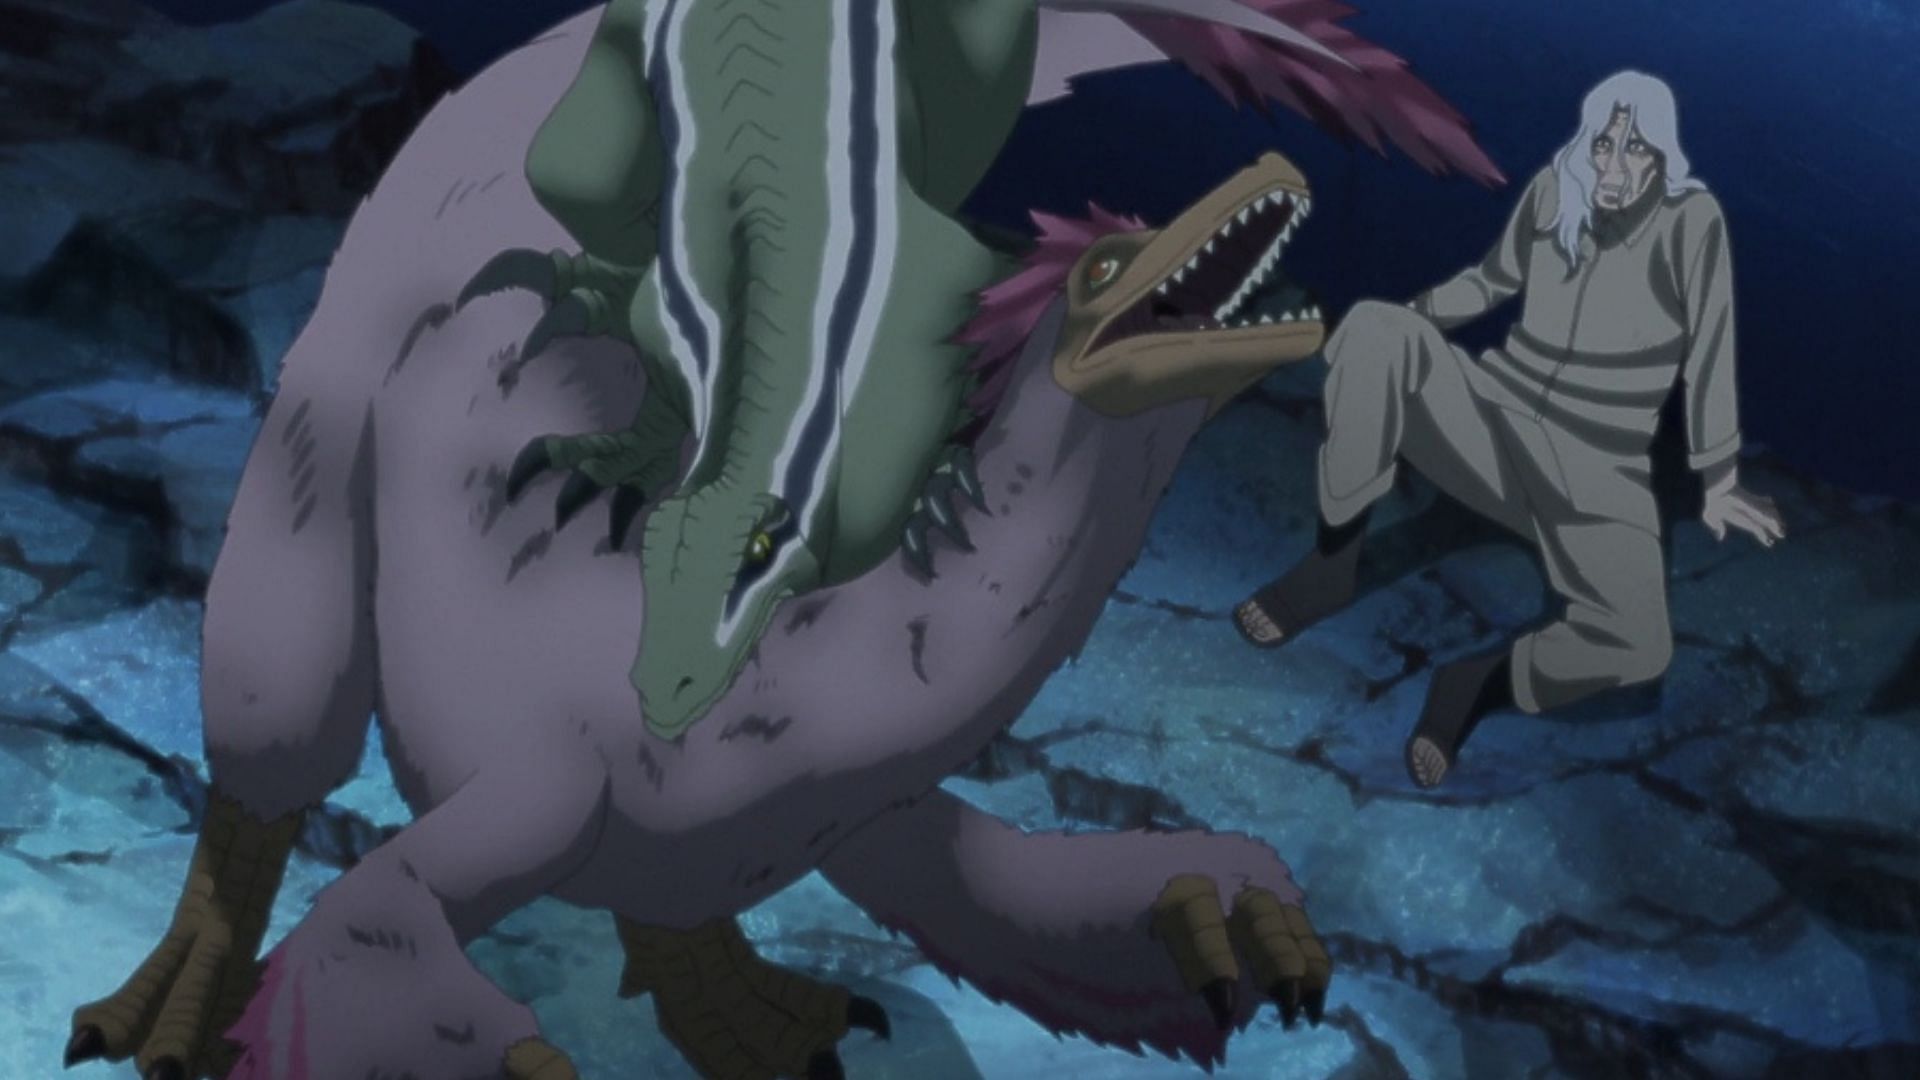 Meno kills a dragon to save Ganno in Sasuke Retsuden chapter 8 part 1 (Image via Studio Pierrot)